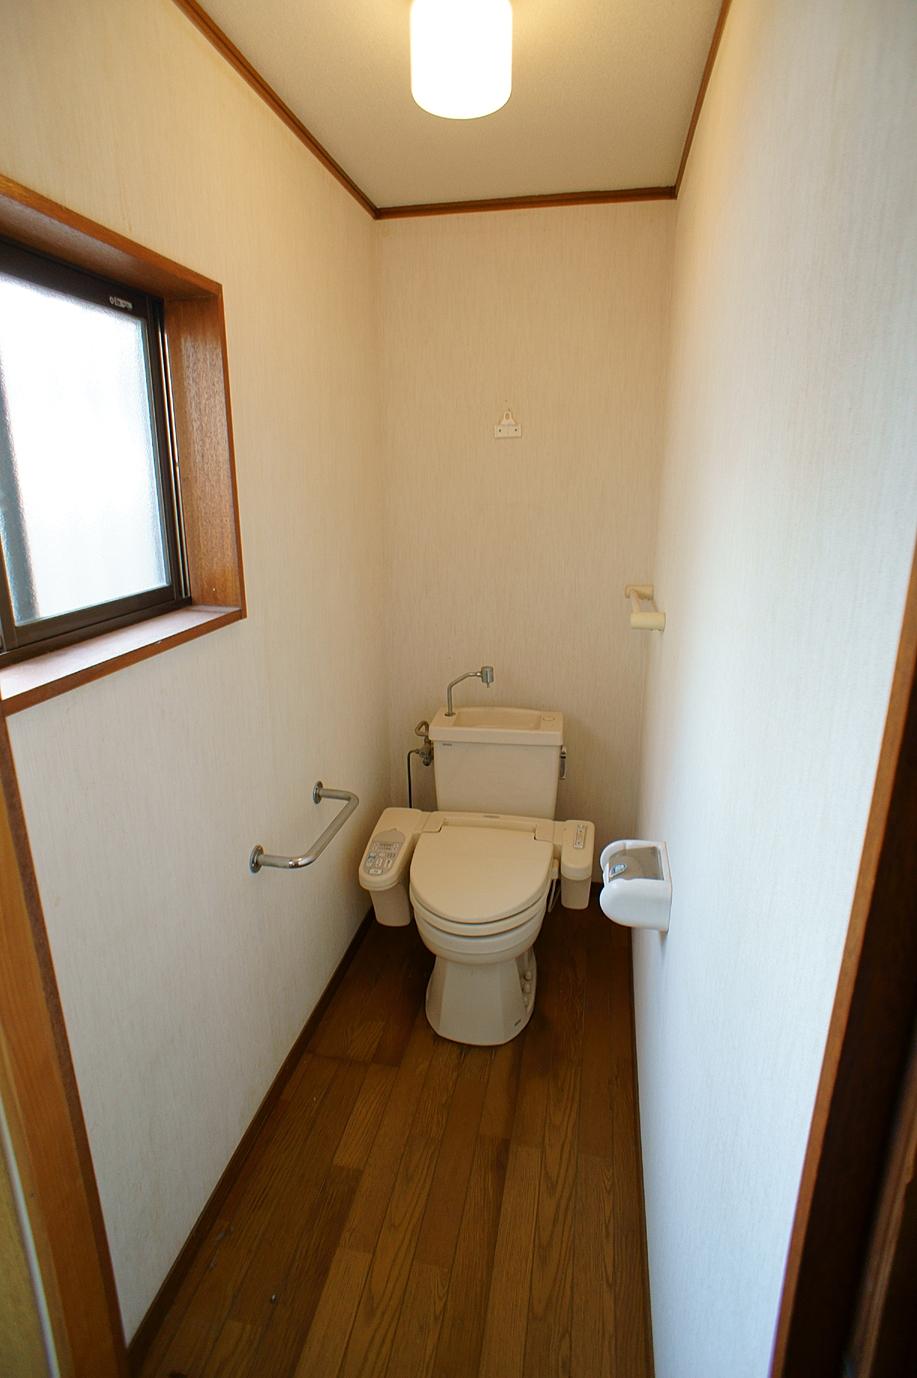 Toilet. July 2012 shooting